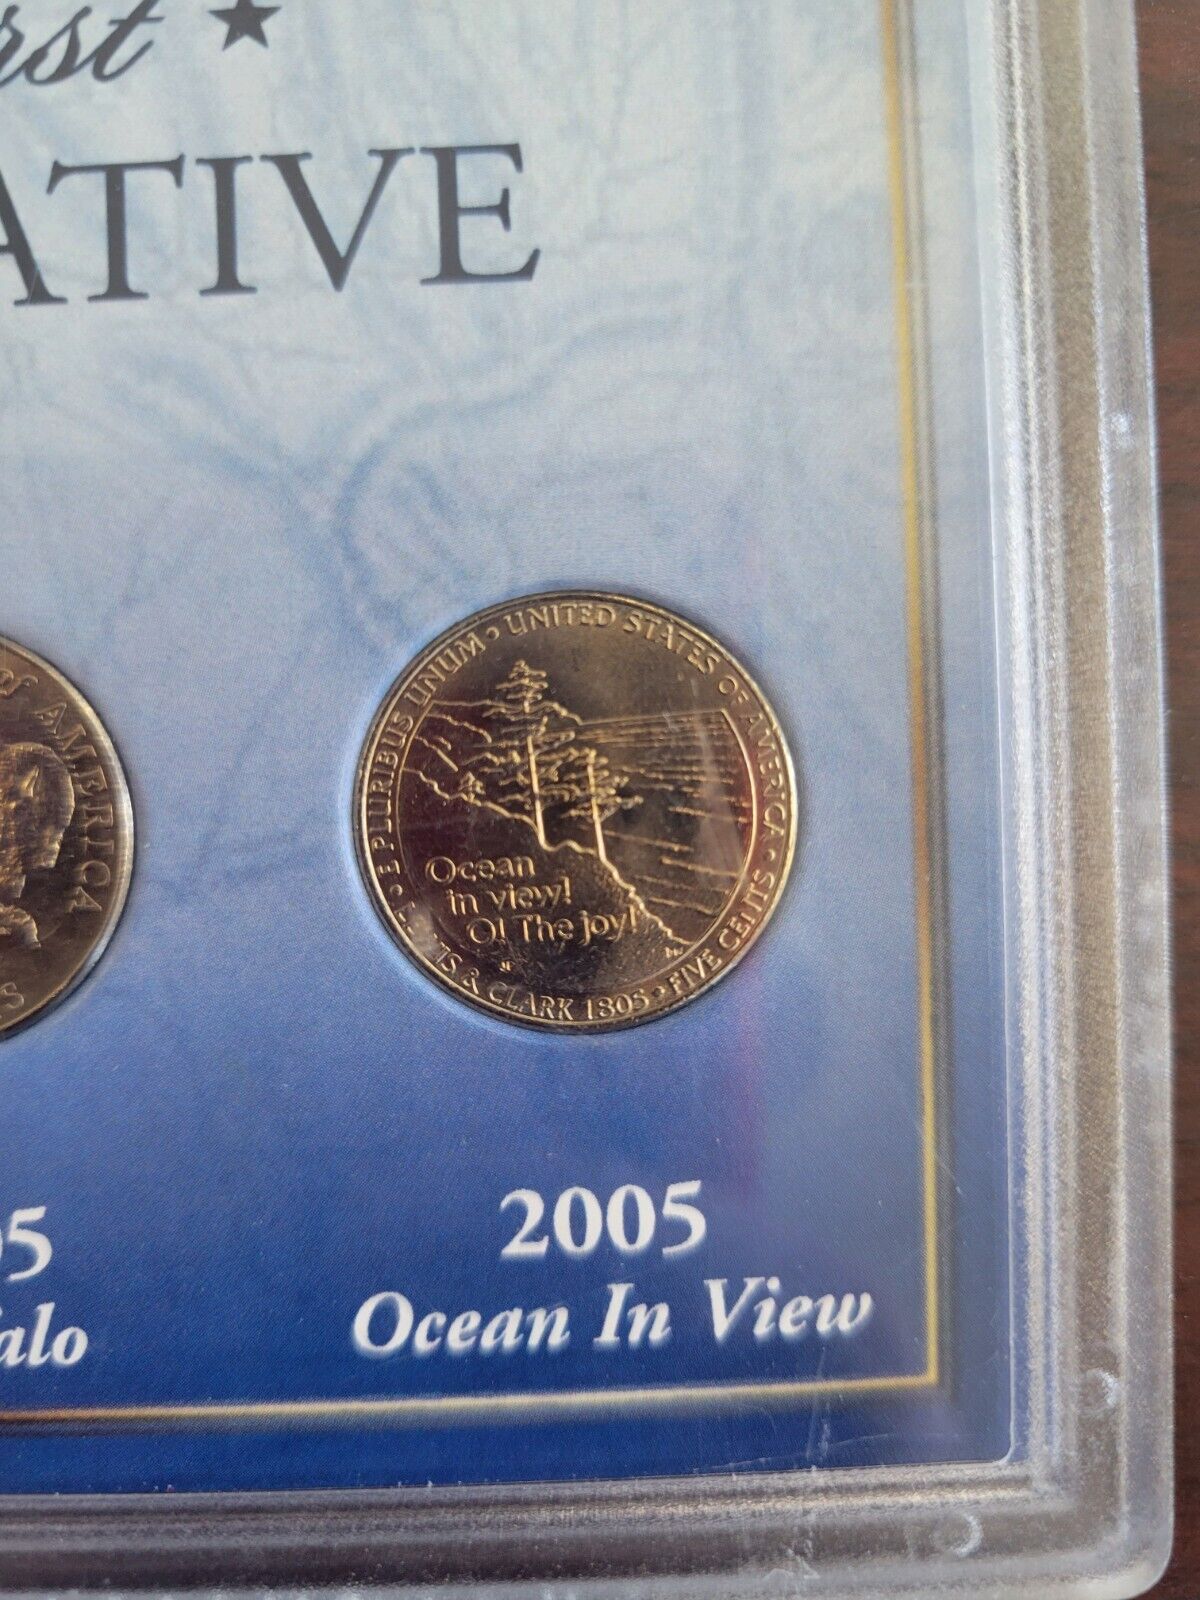 Americas First Commemorative 4pc Nickel Set 2004-2005 peace, keelboat, Buffalo